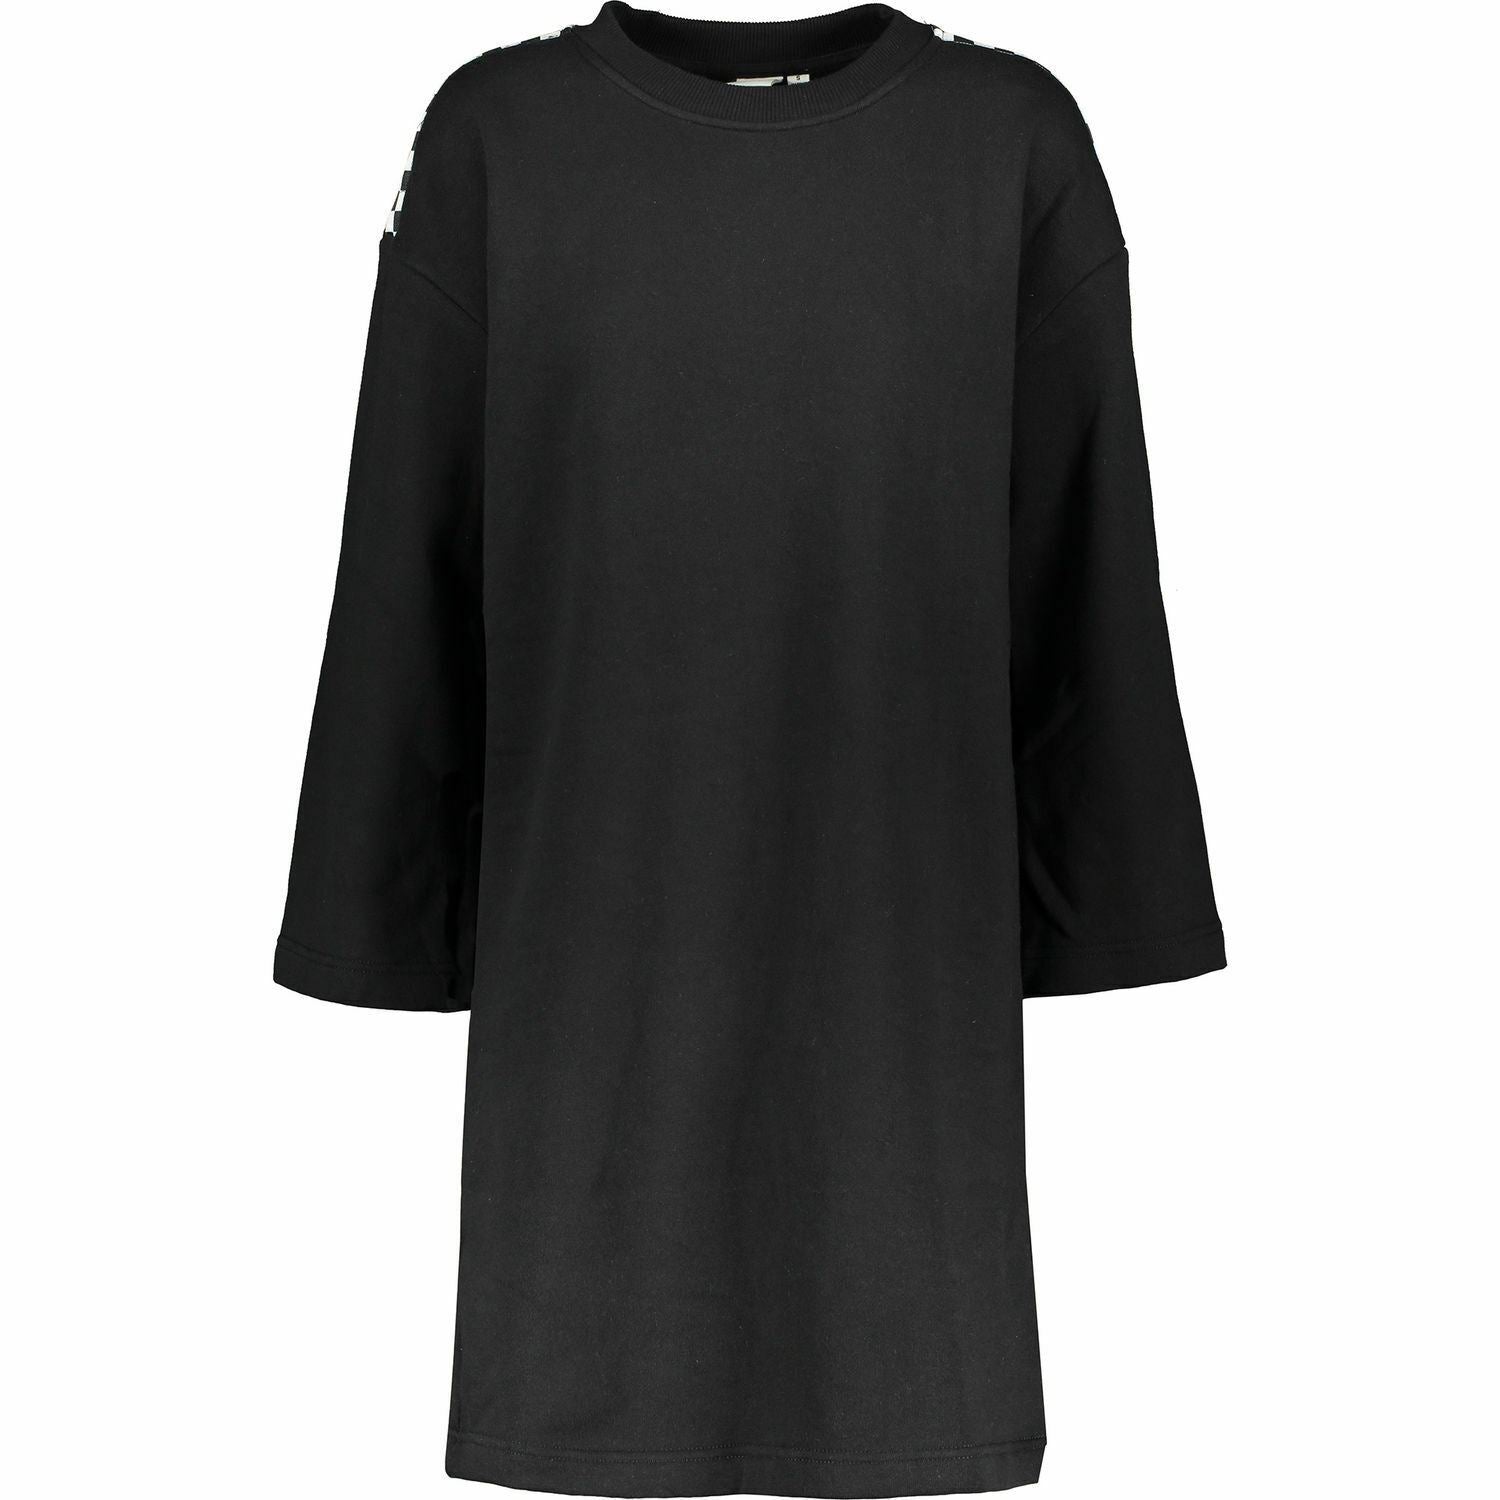 VANS Women's Black Sweatshirt Dress, Shoulder Tape, Black, size XS